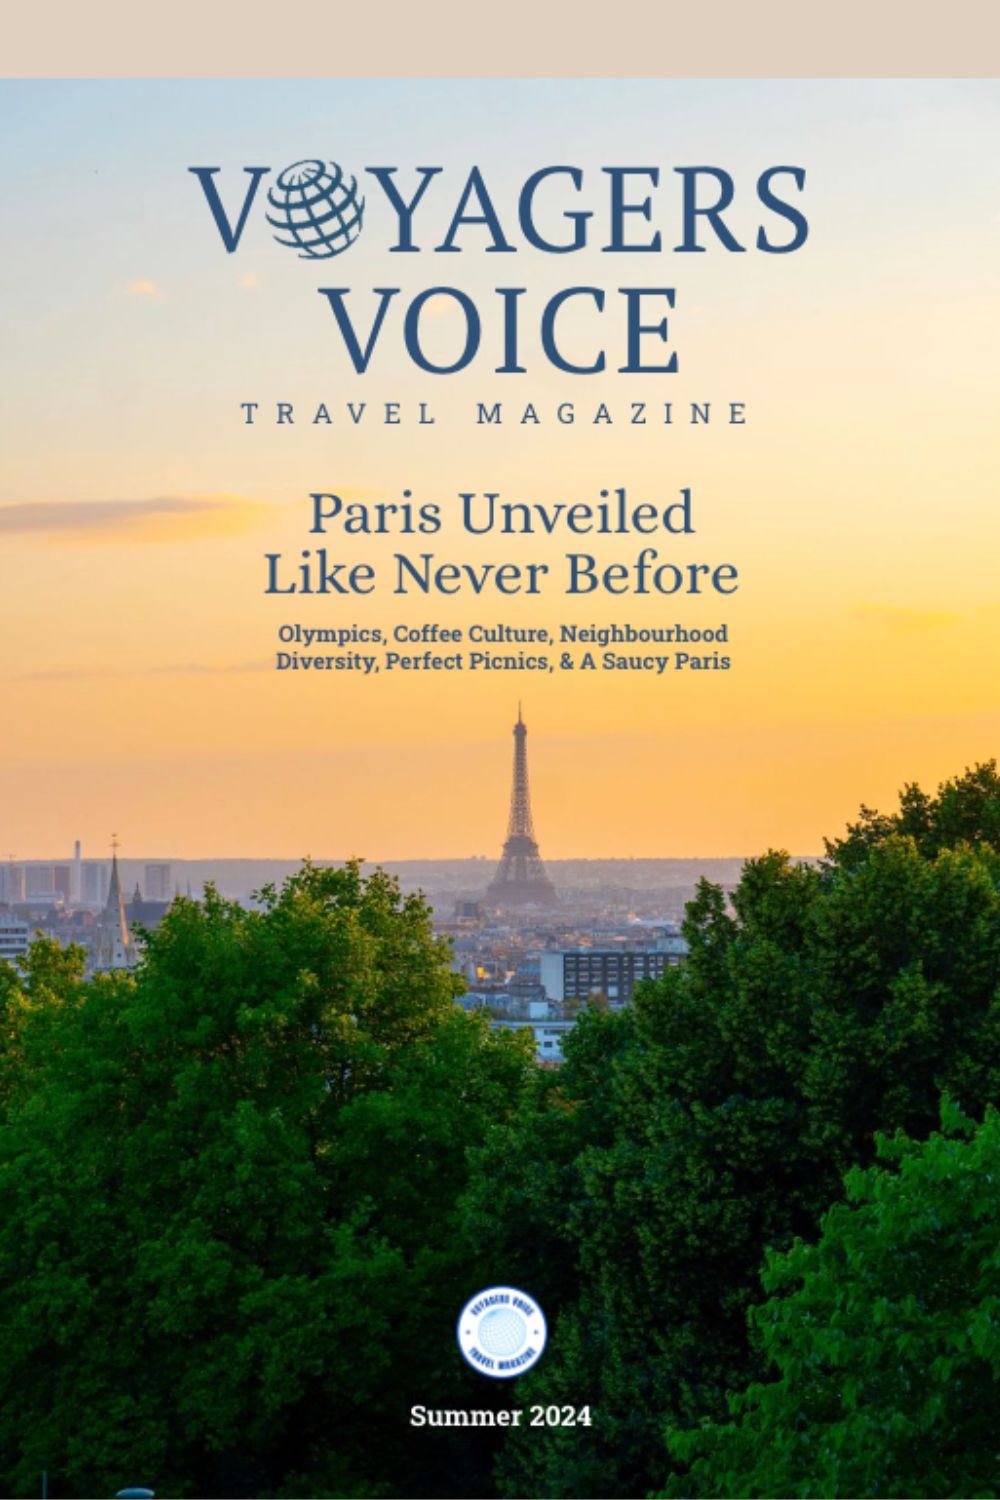 Voyager's Voice Paris issue cover